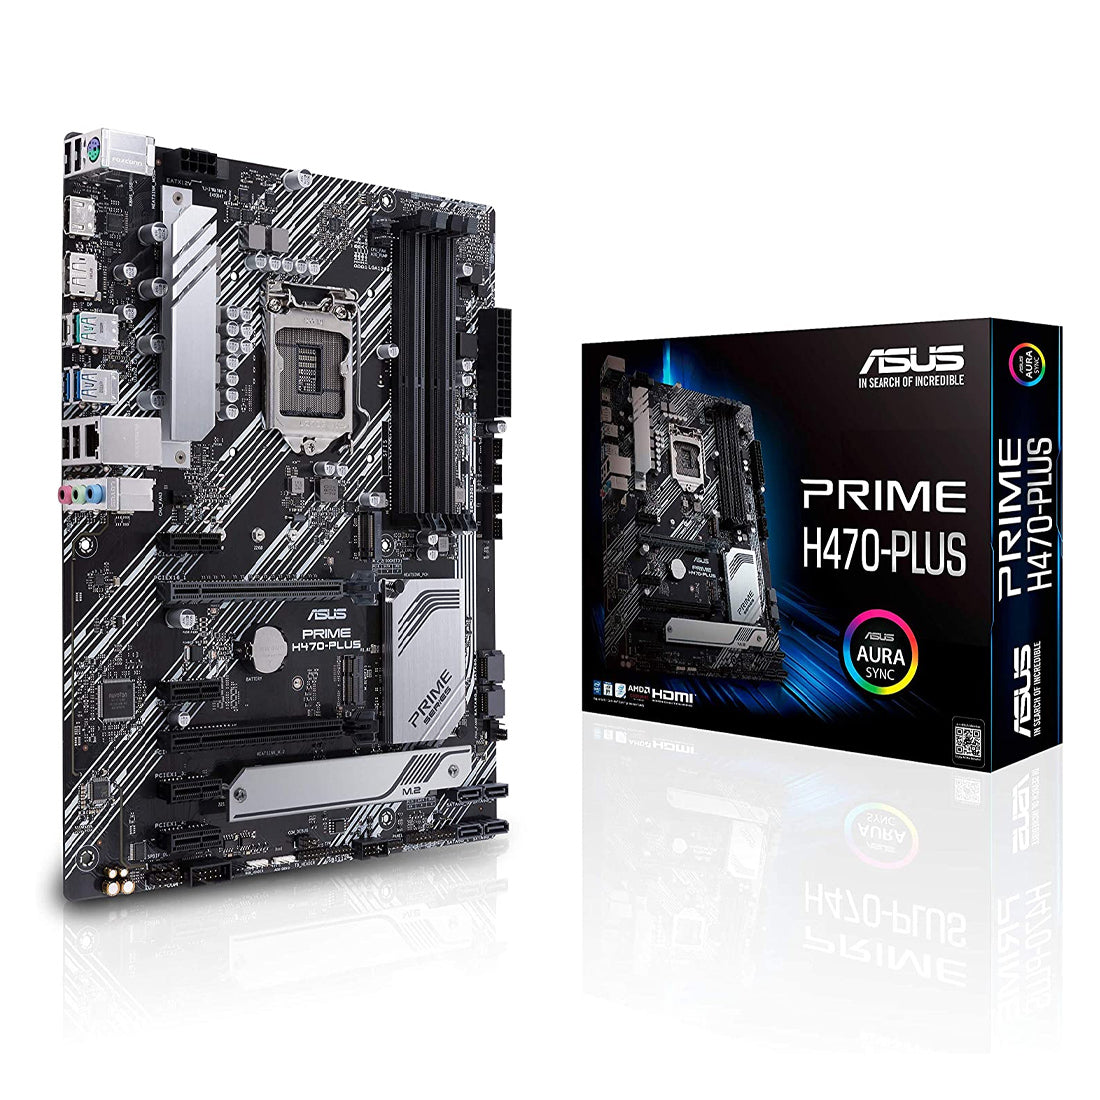 ASUS Prime H470-Plus LGA 1200 ATX Motherboard with Aura Sync RGB Thunderbolt 3 and Dual M.2